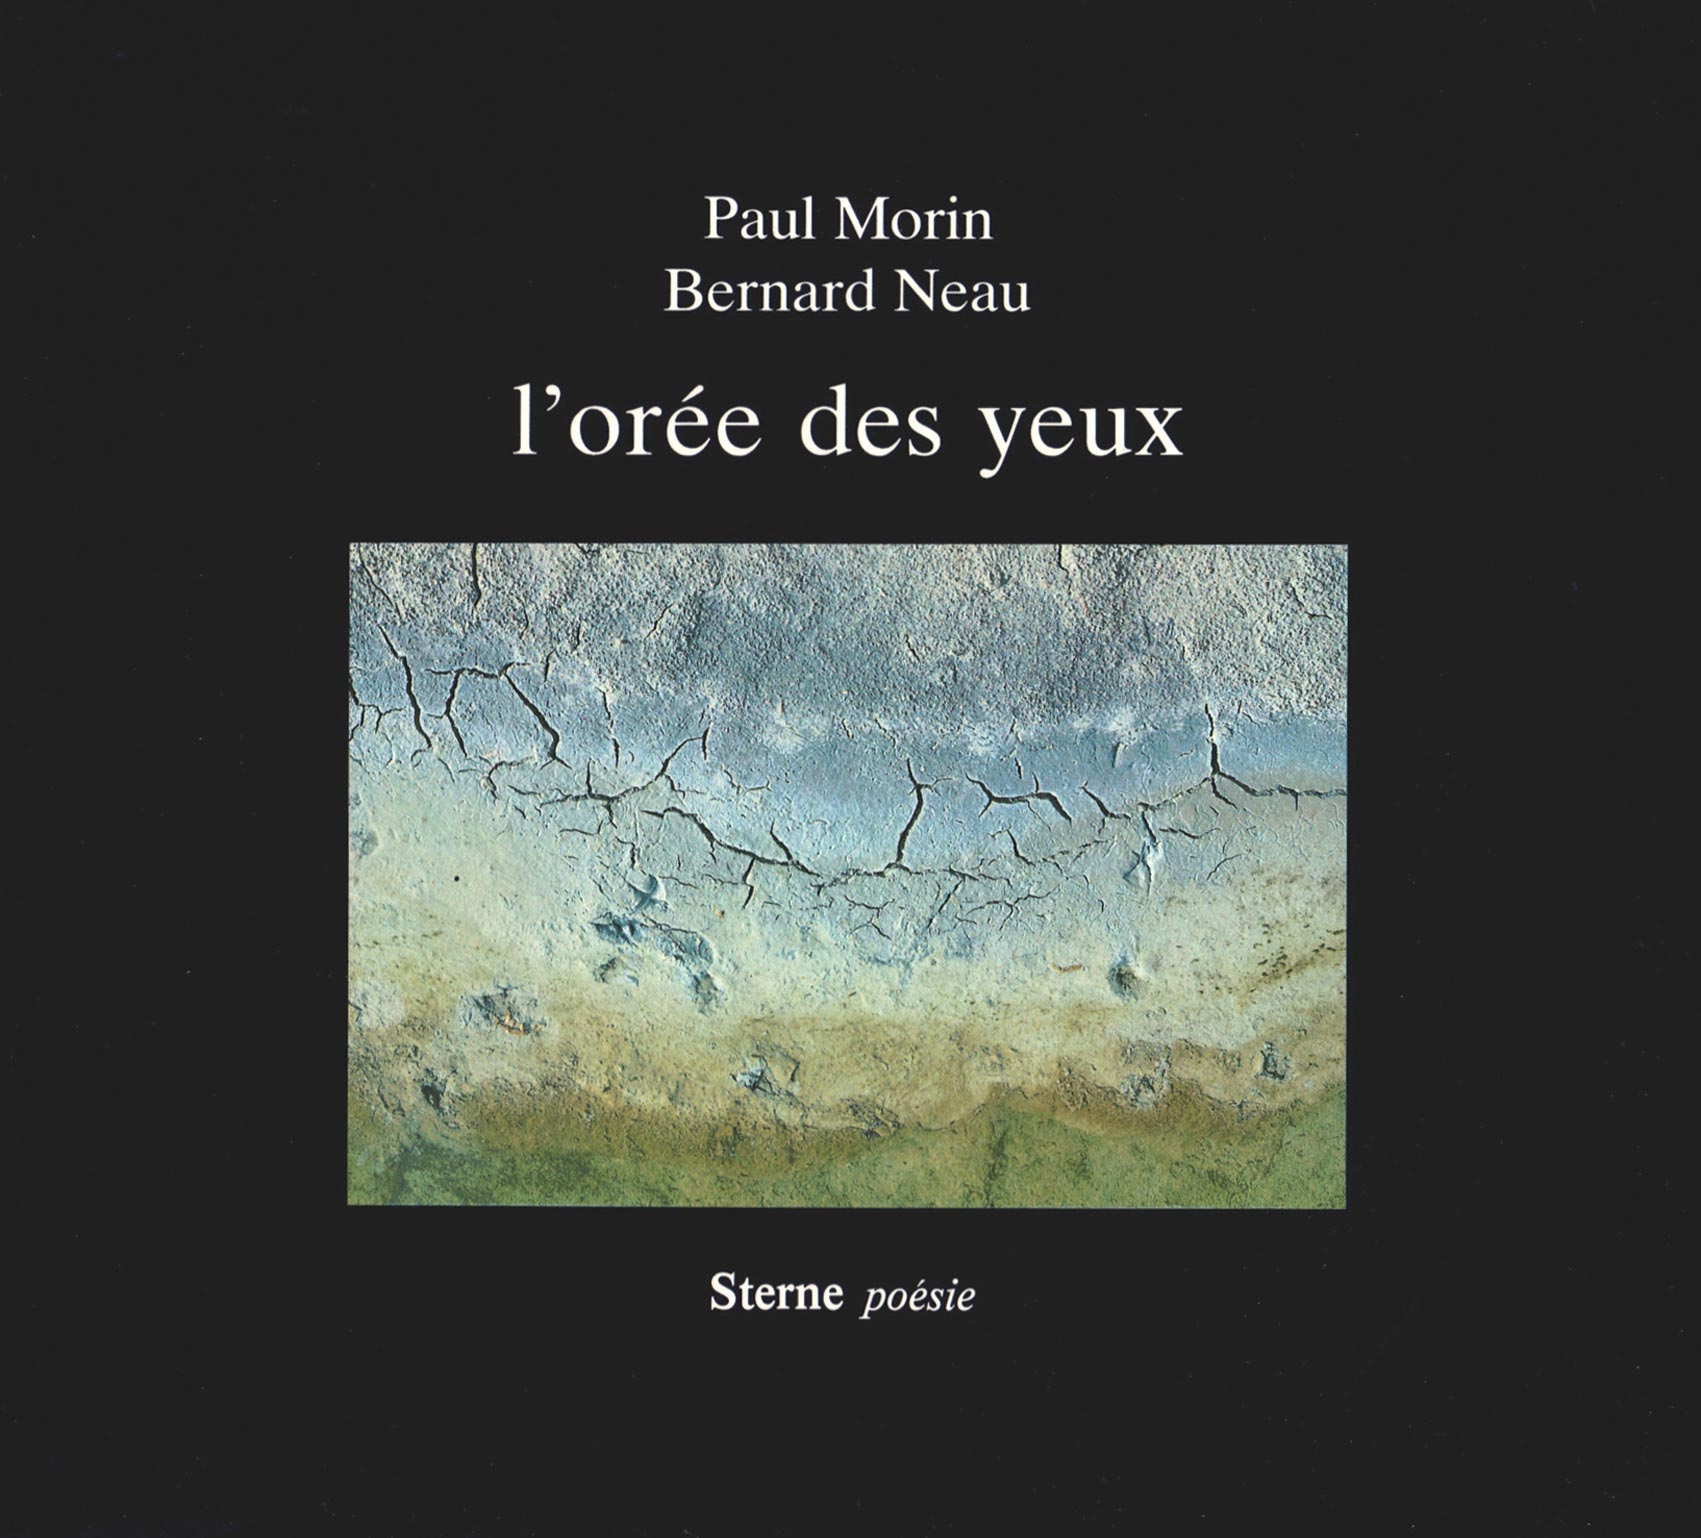 Paul Morin & Bernard Neau, L'Orée des yeux, STERNE poésie, 1983